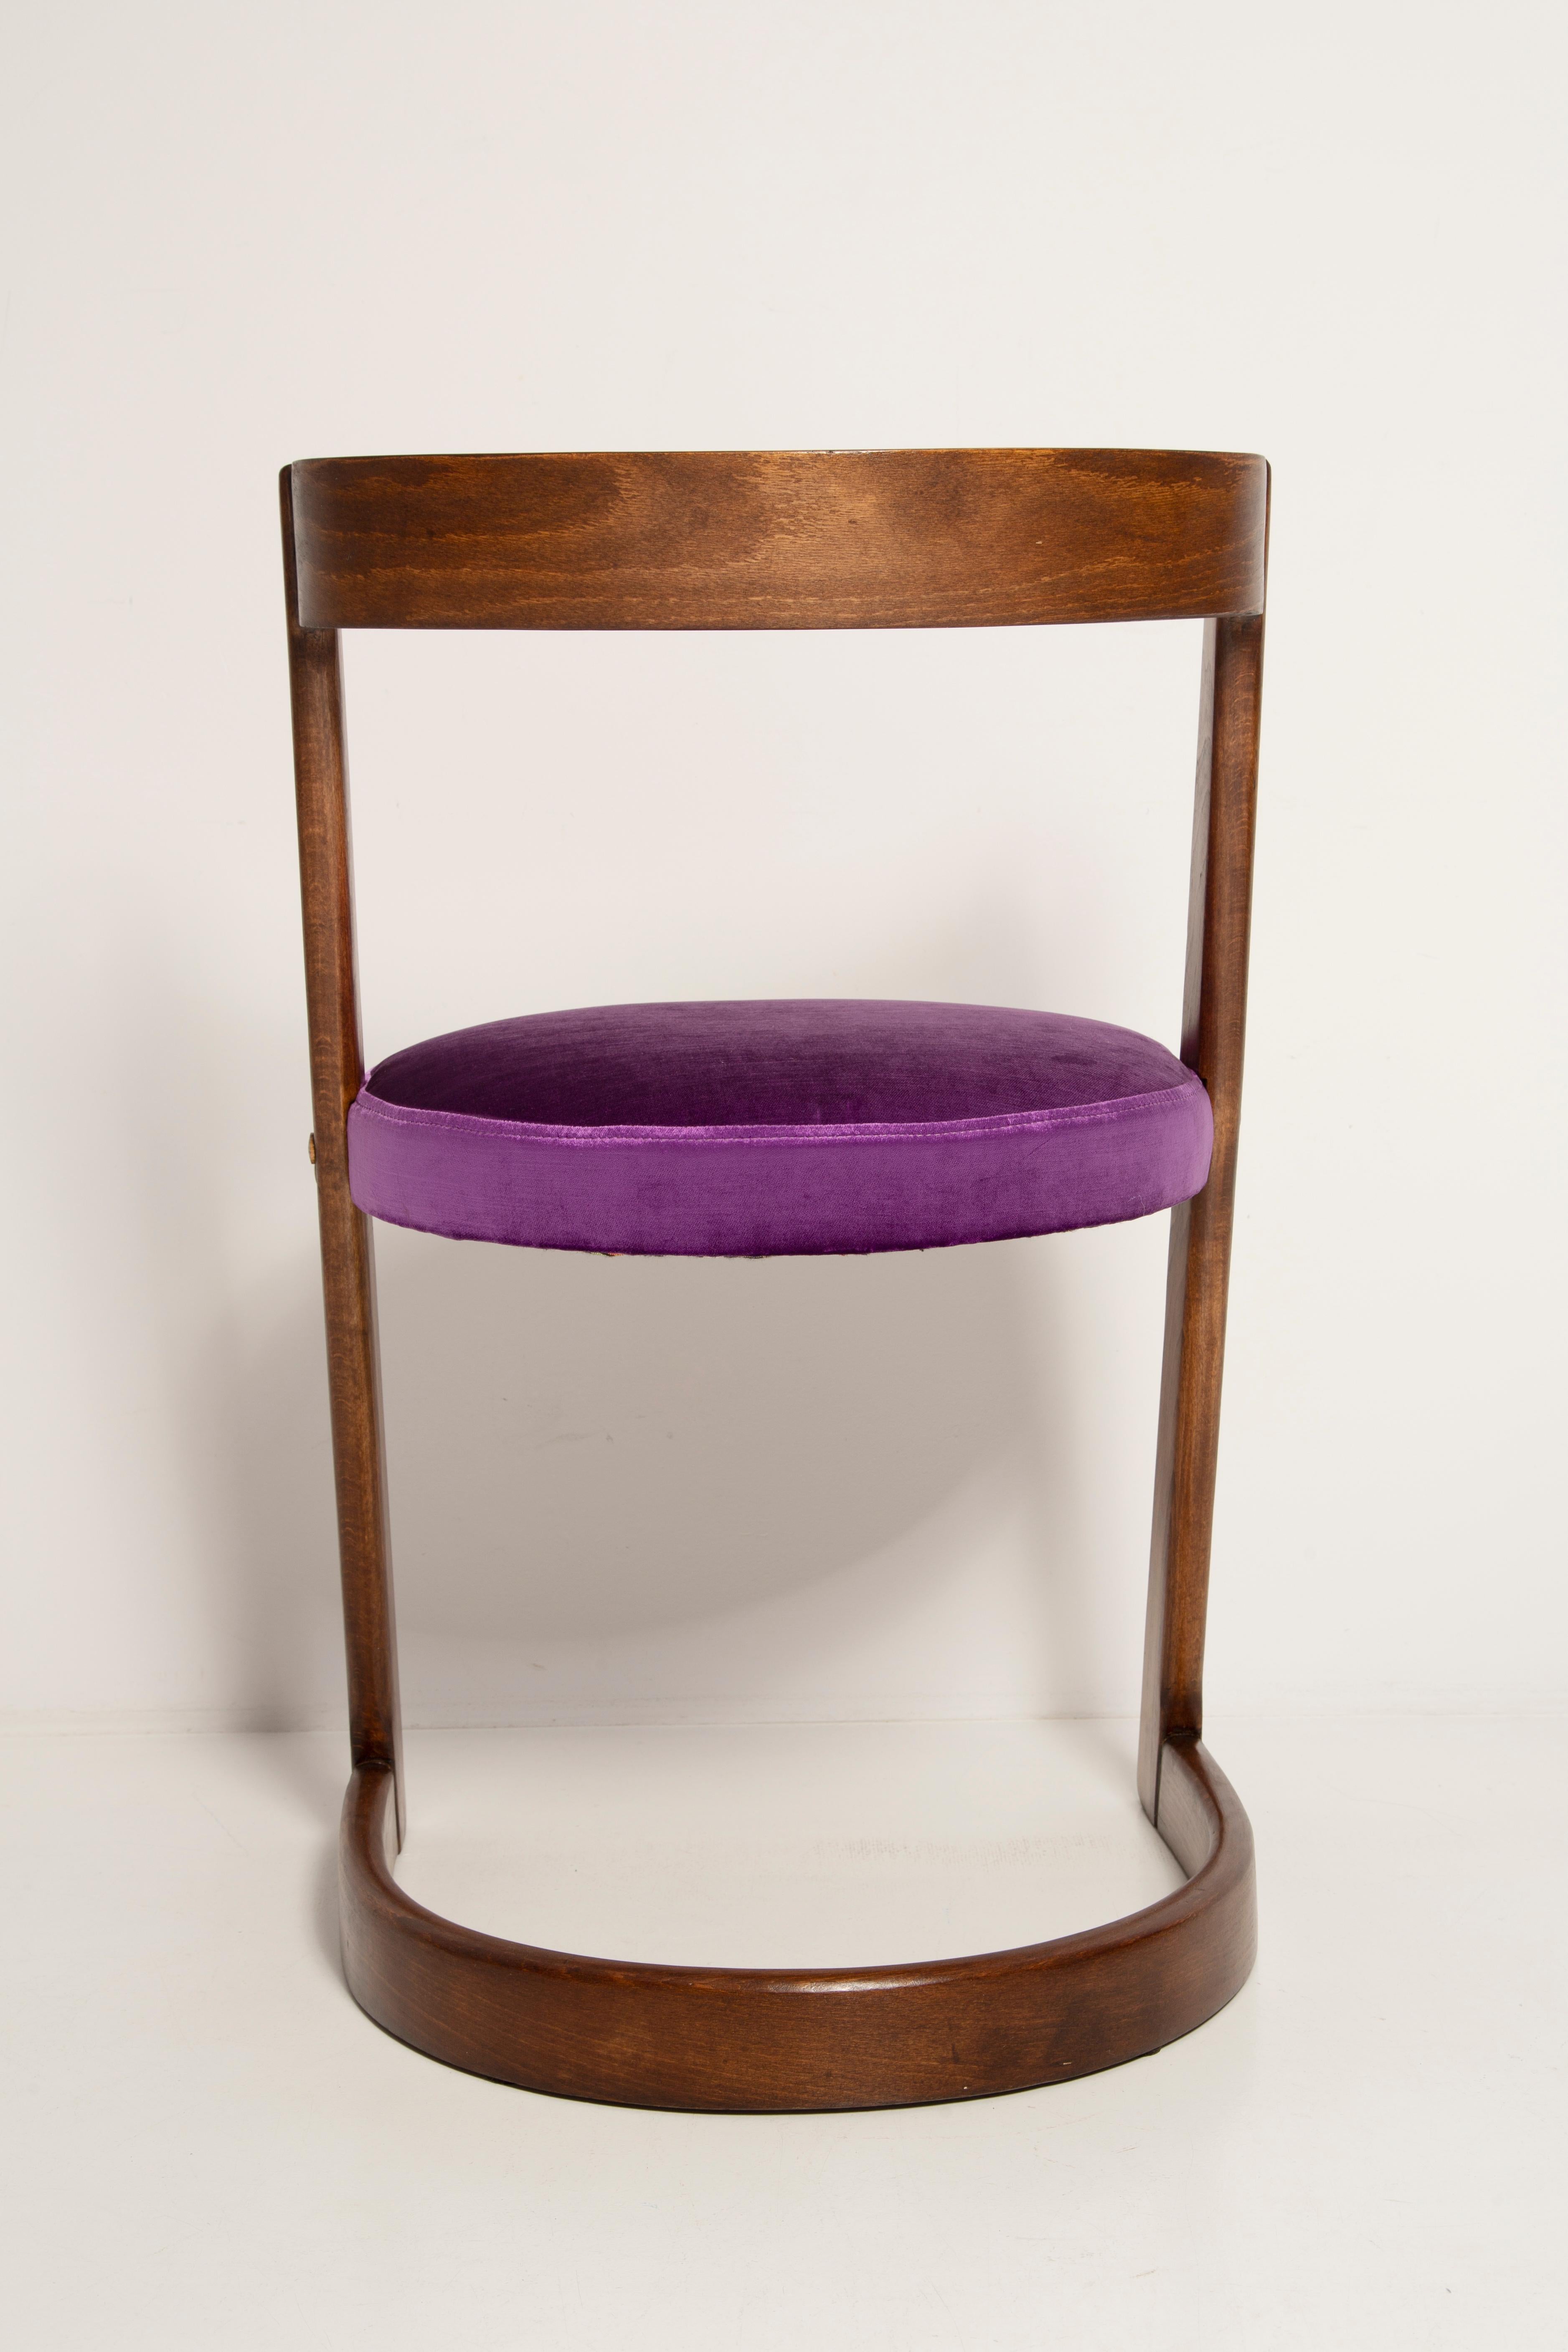 20th Century Midcentury Purple Velvet Halfa Chair, Baumann, France, 1970s For Sale